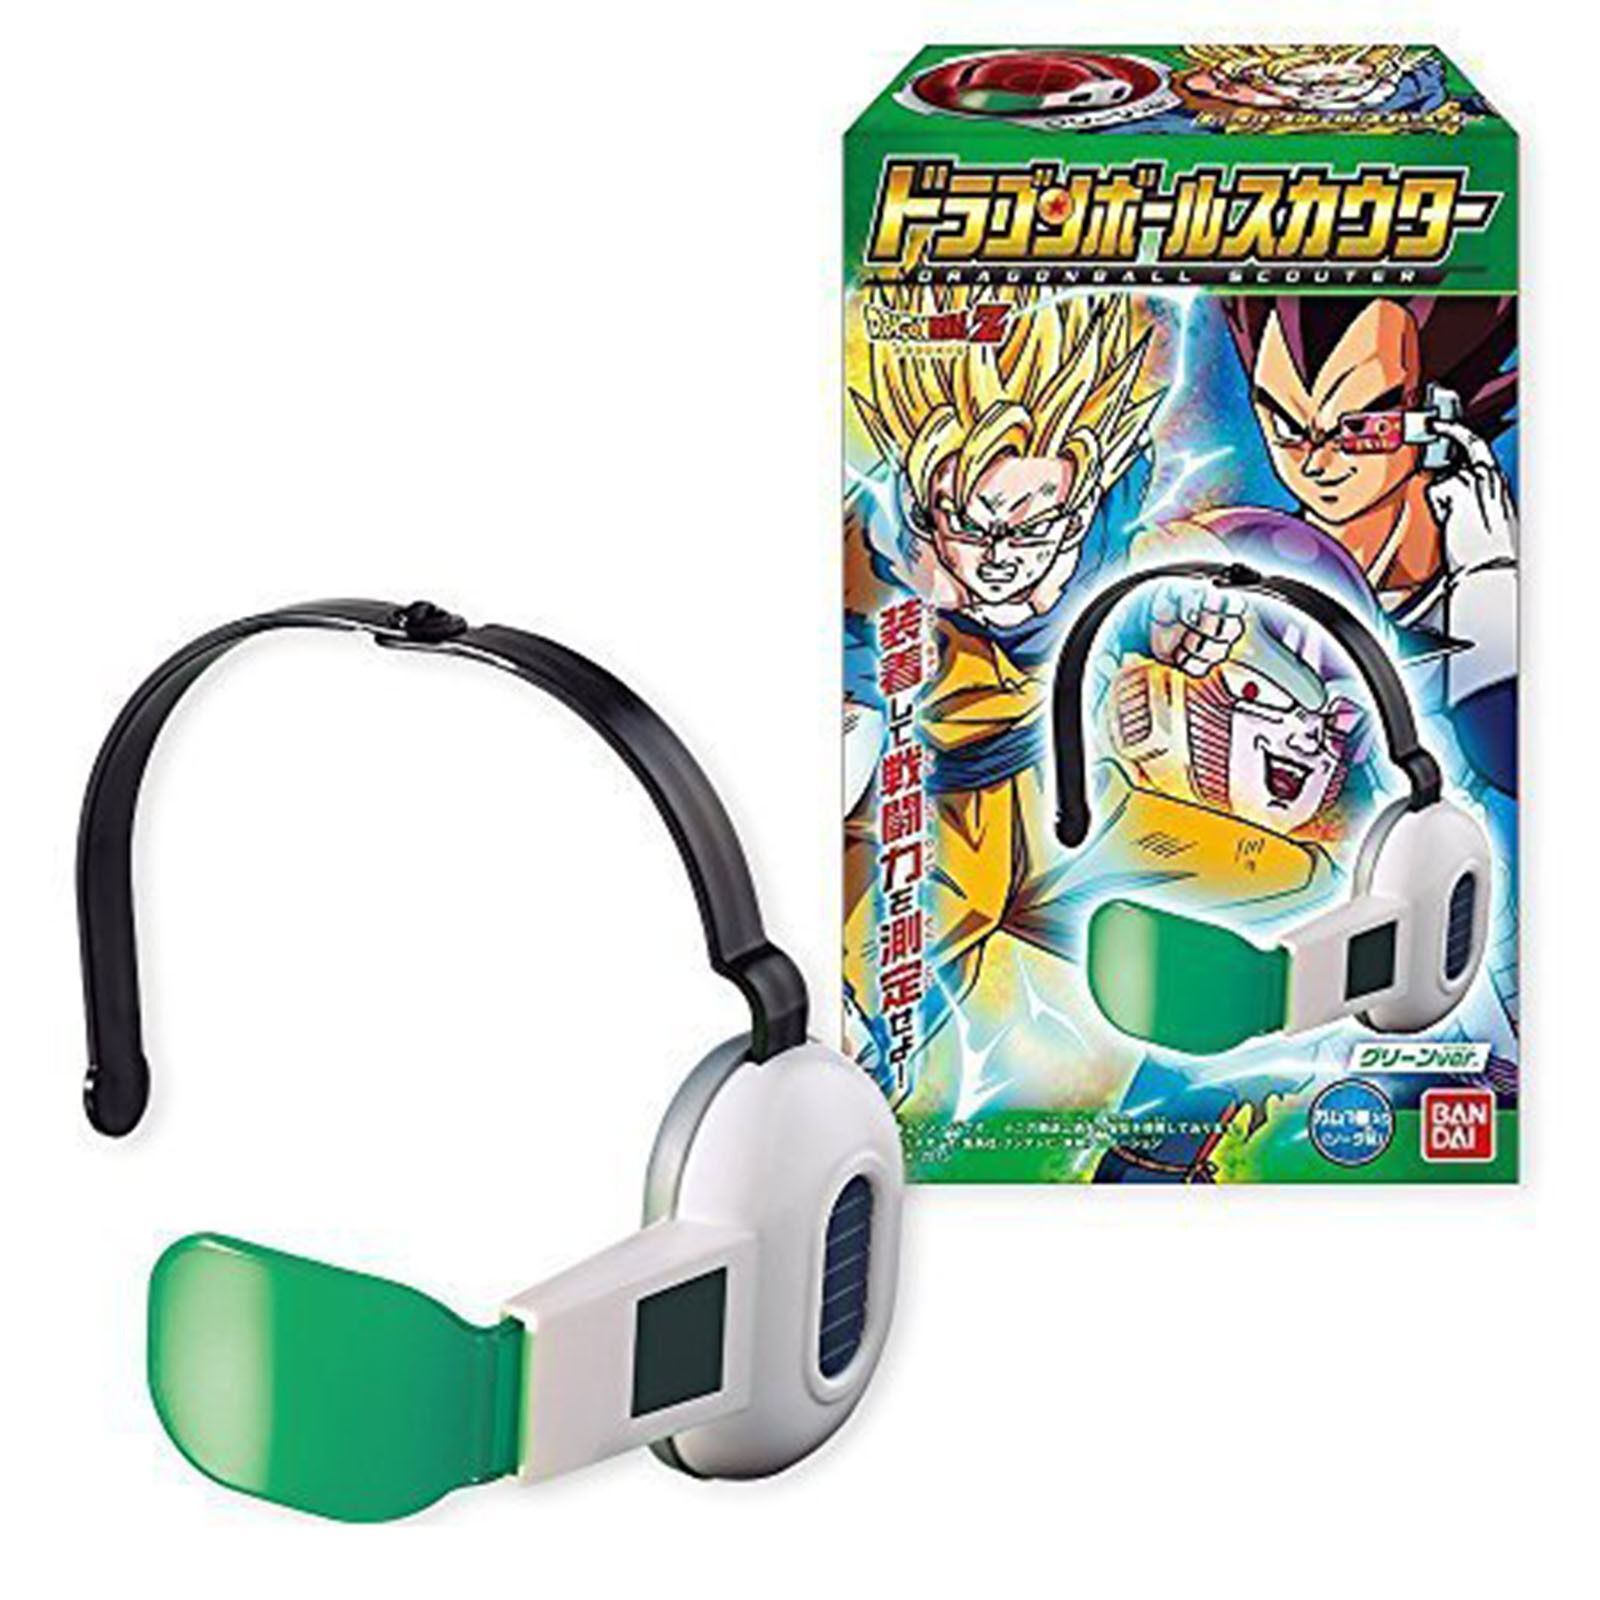 Bandai Dragon Ball Z Saiyan Scouter Green Lens	 NEW Toys DBZ Cosplay Anime DRAGONBALL Z